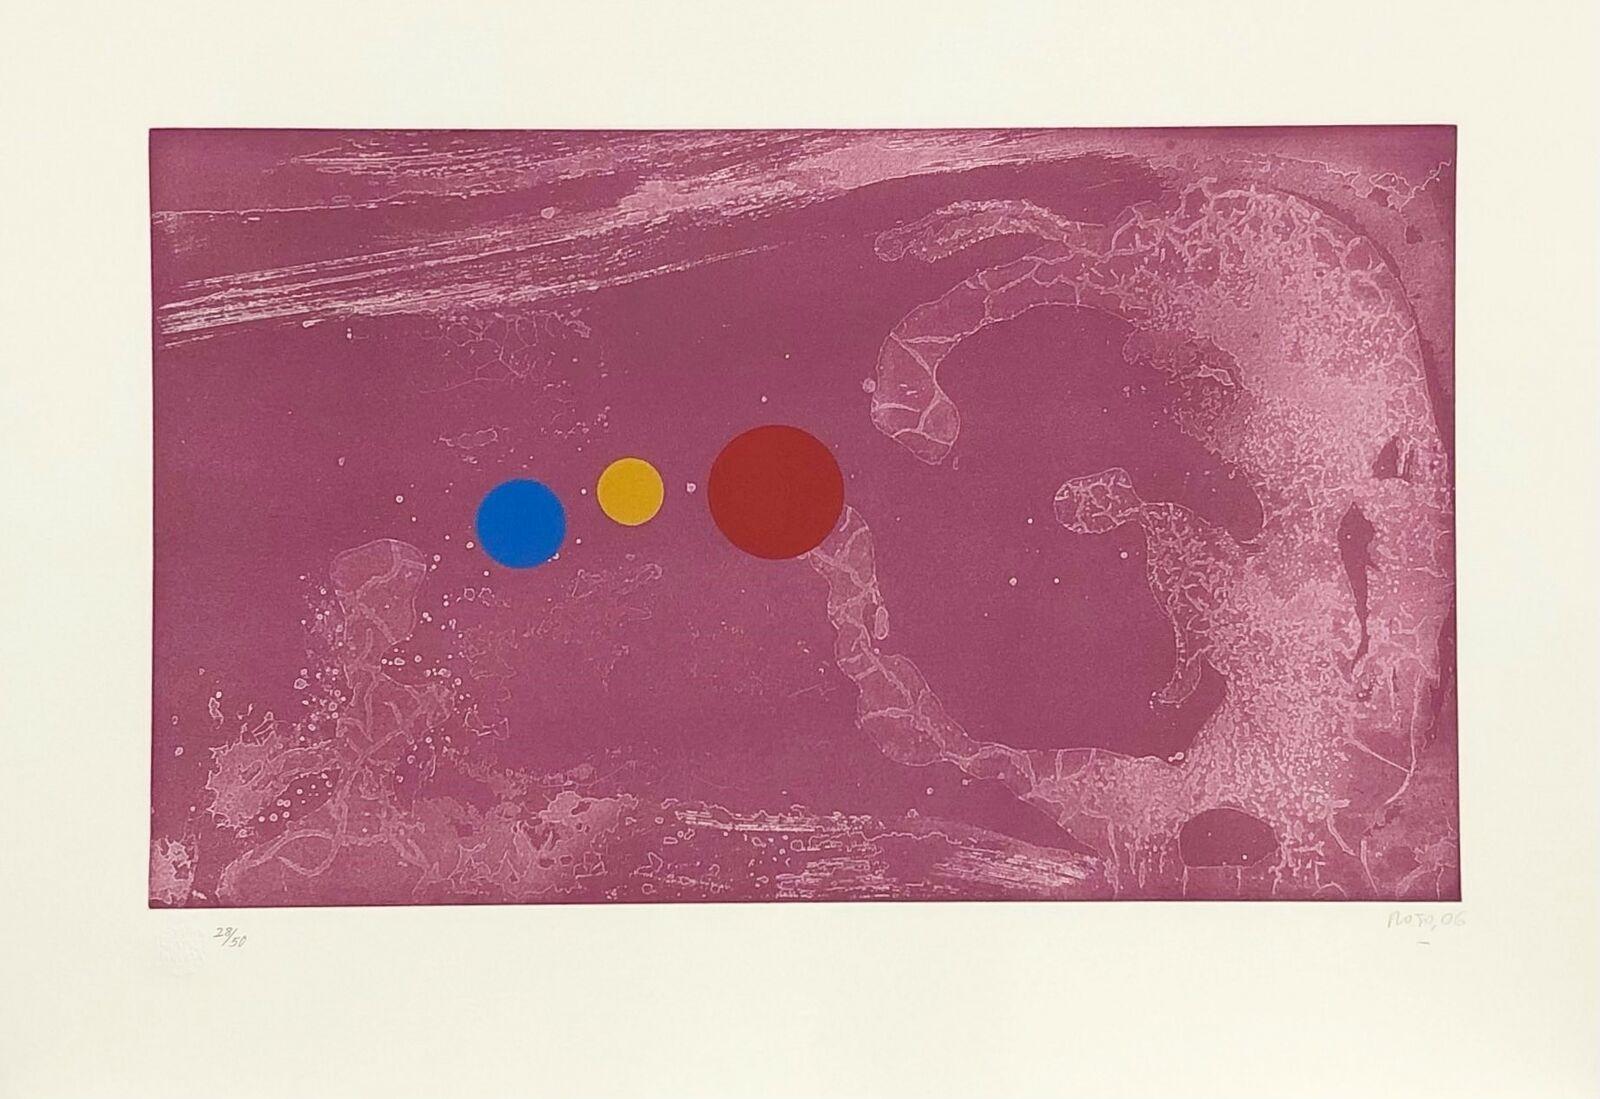 Vicente Rojo (Mexico, 1932-2021)
'Suite Nubes de fuego IV', 2006
aquatint, silkscreen on paper Guarro Super Alpha 250g.
18.9 x 26.8 in. (48 x 68 cm.)
Edition of 50
ID: ROJ-121
Unframed
